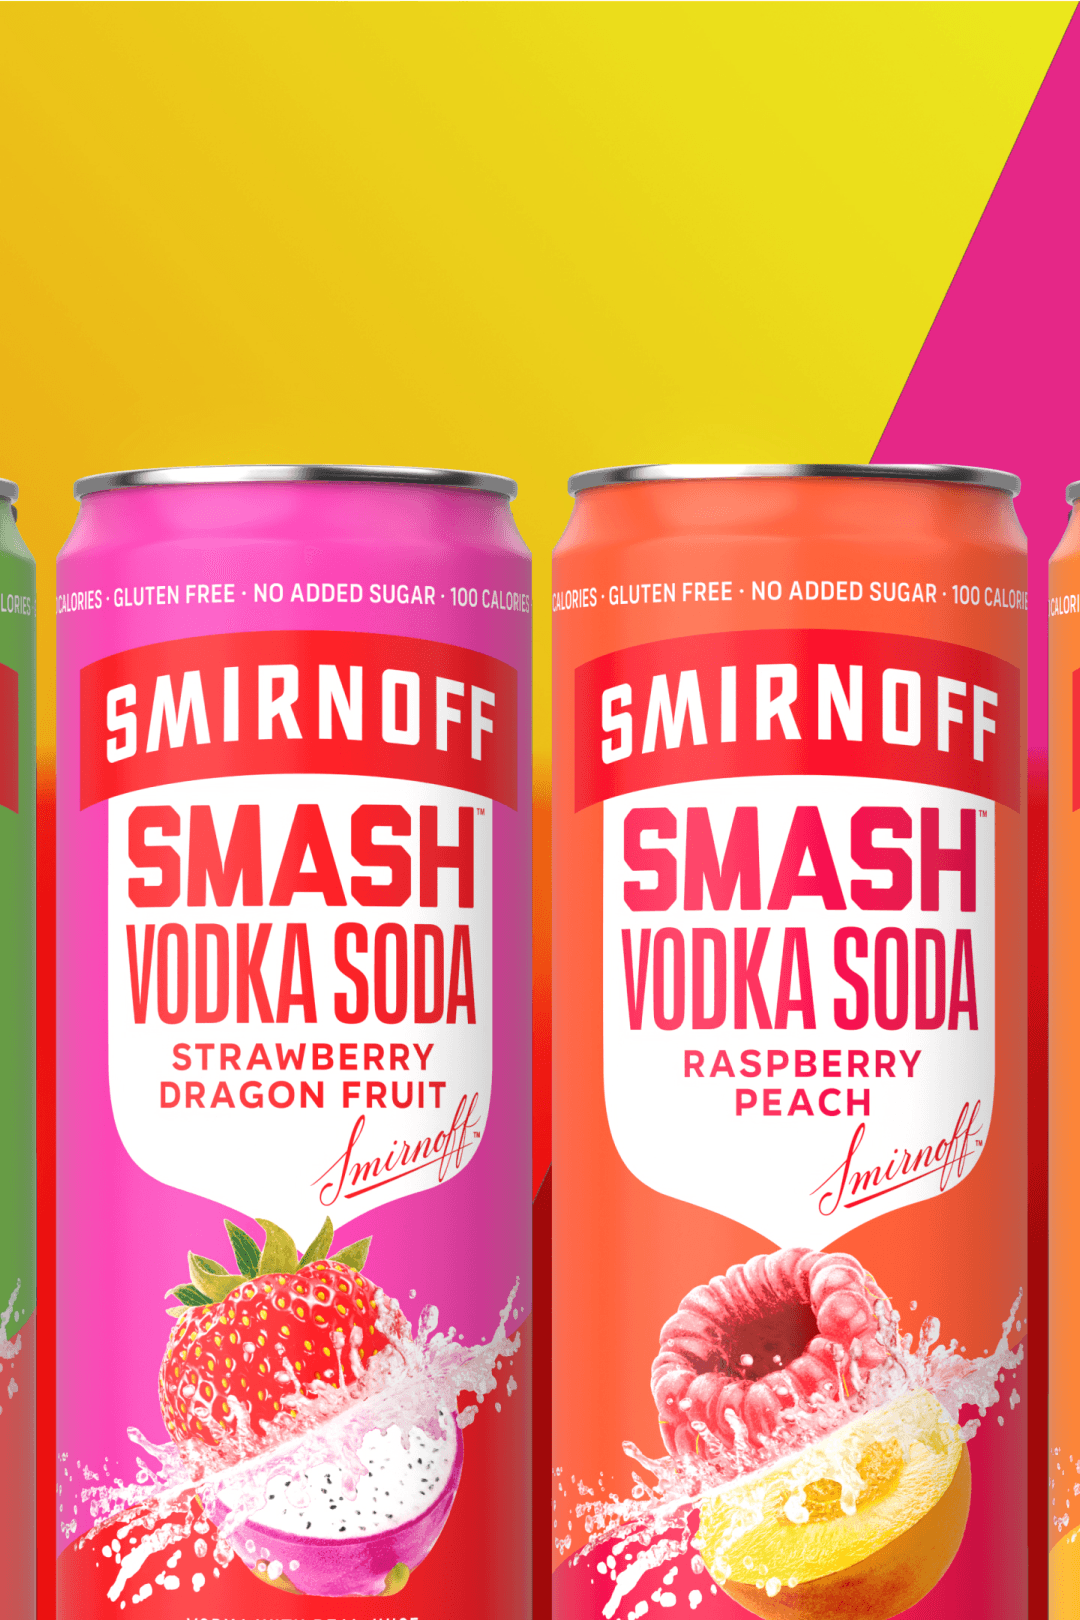 Smirnoff Smash Vodka Soda produts on a two tone background